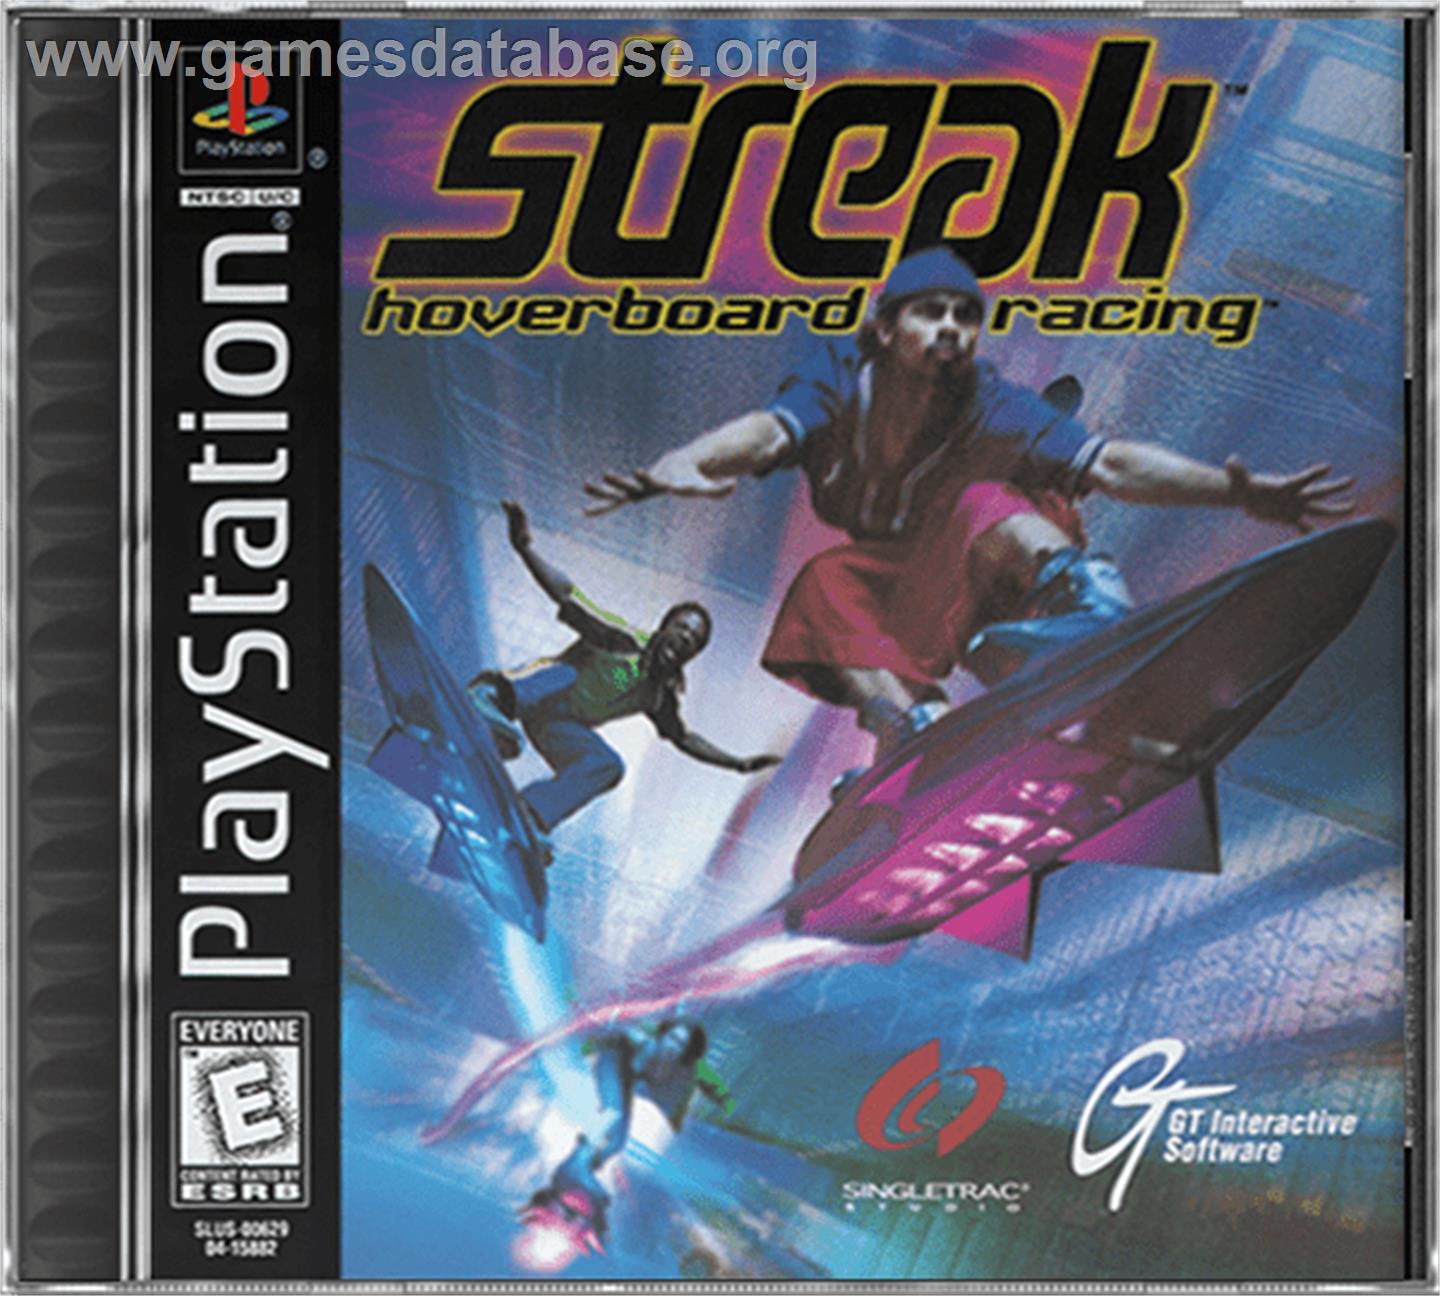 Streak Hoverboard Racing - Sony Playstation - Artwork - Box